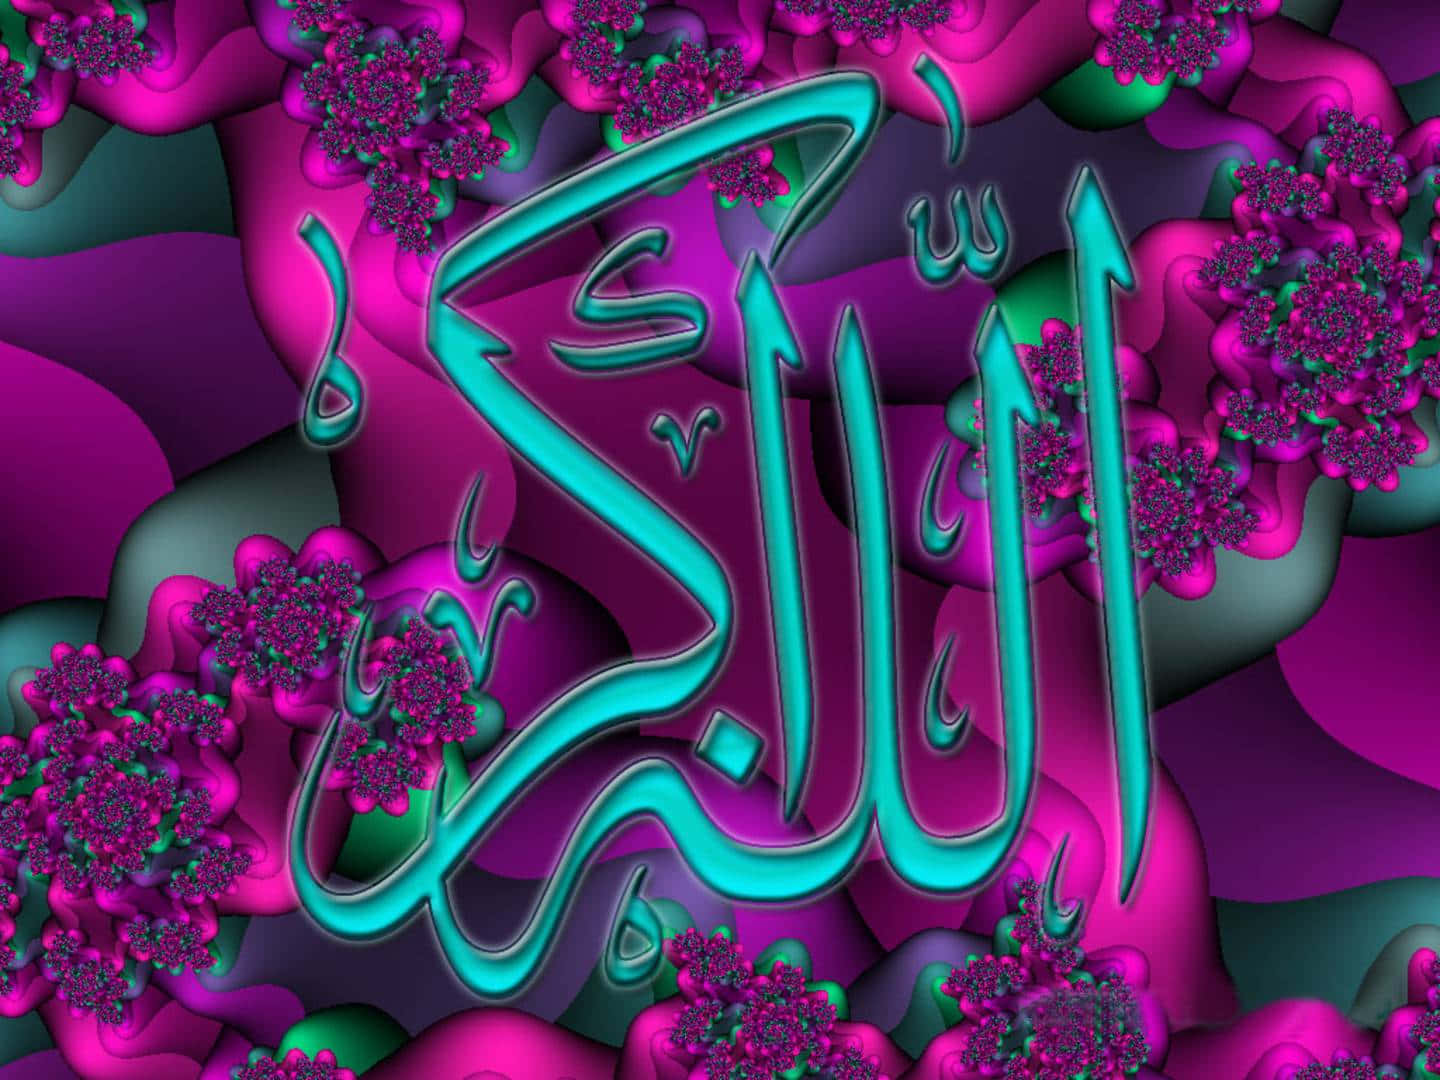 Allah, the Perfect Creator